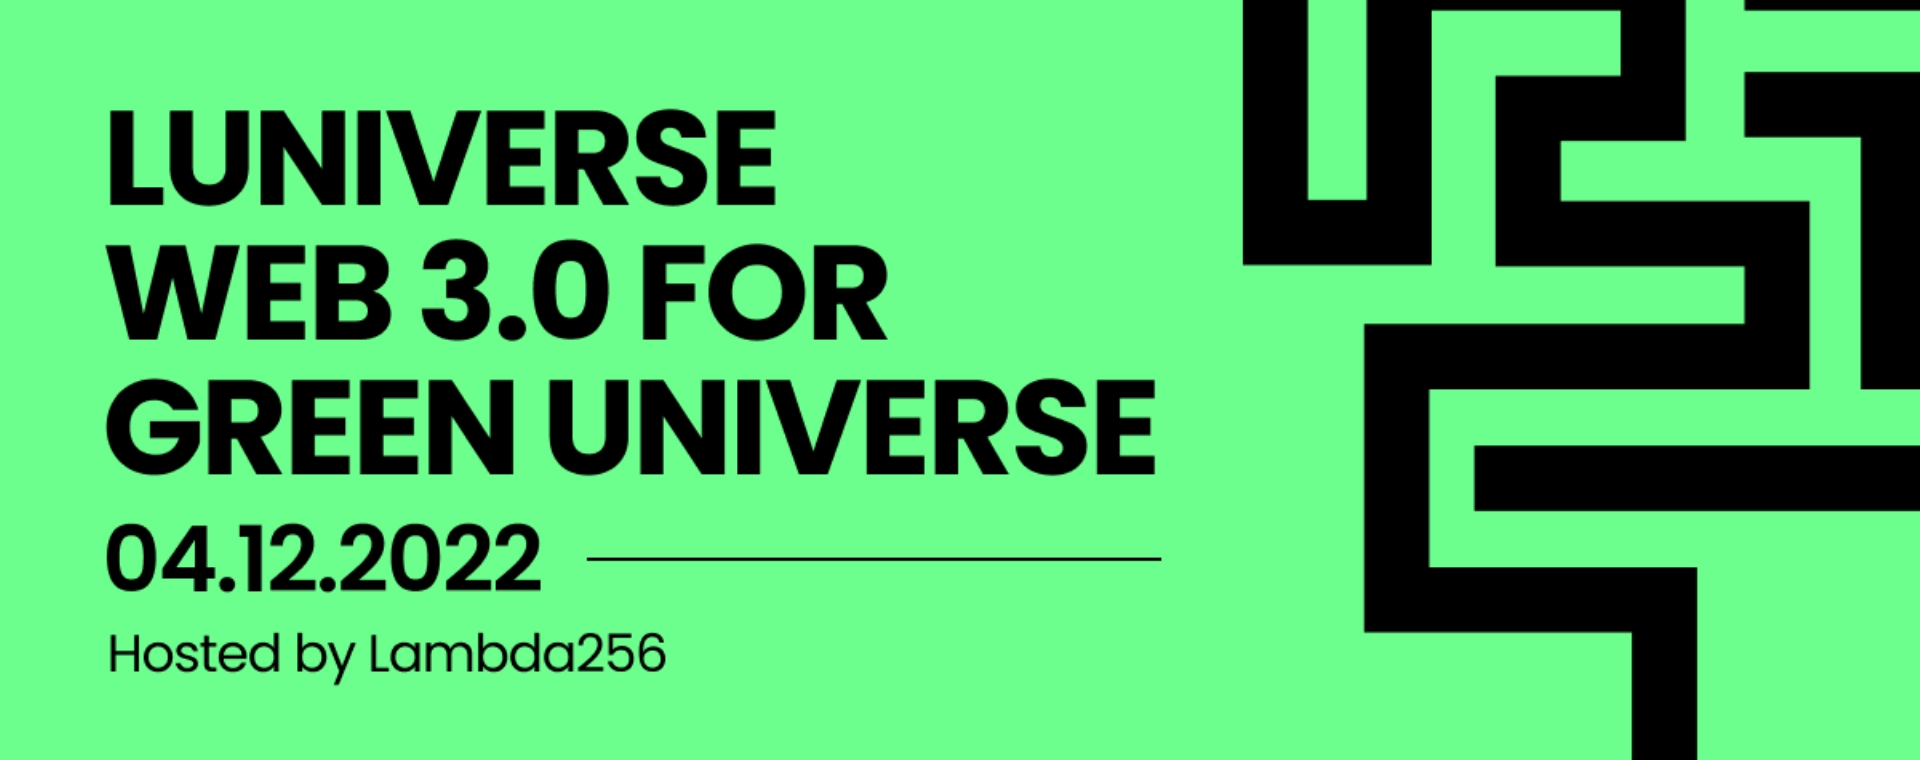 Webinar: Luniverse Web 3.0 for Green Universe